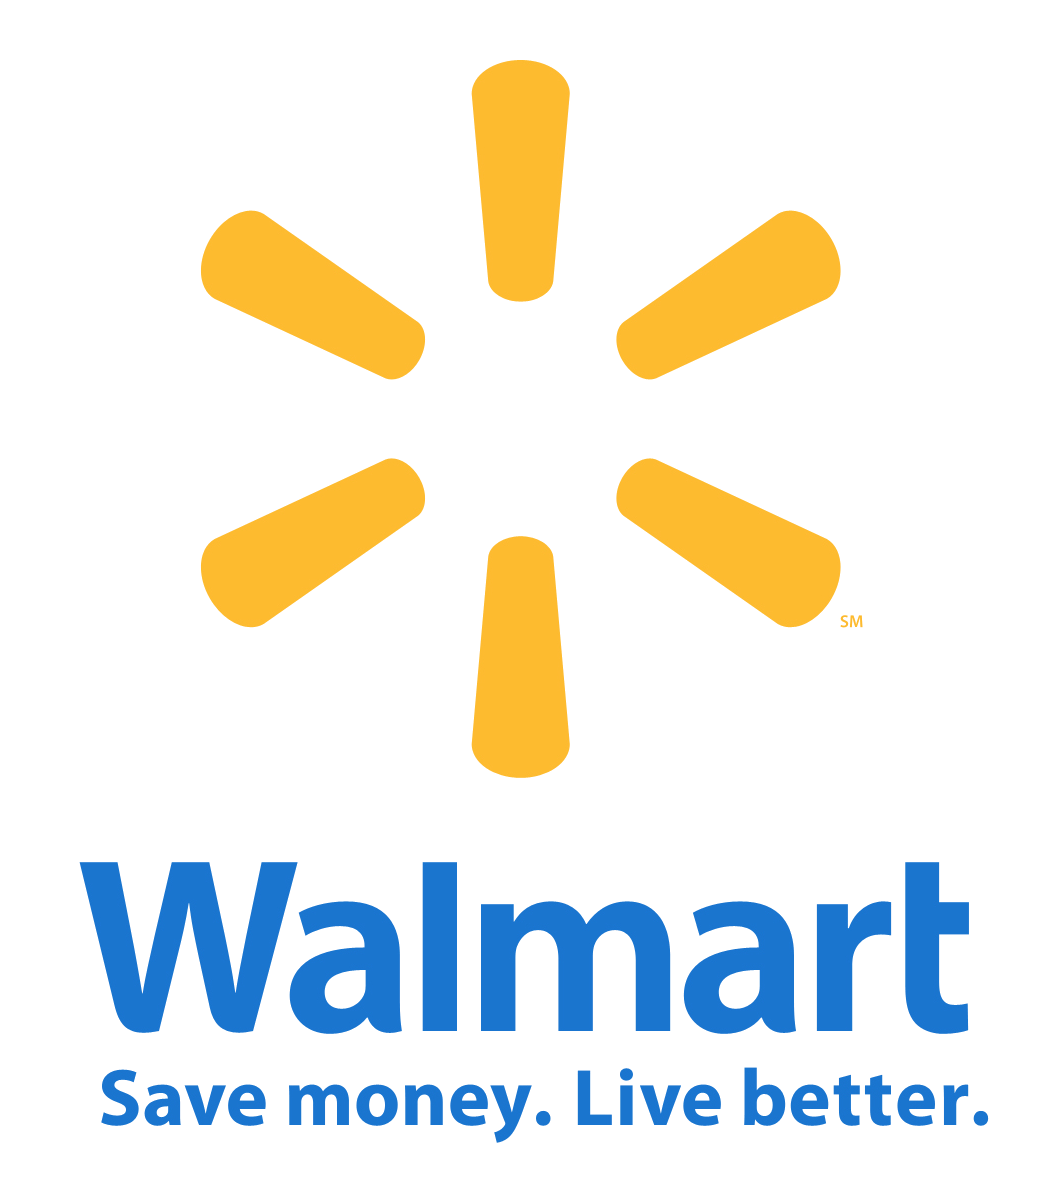 Vertical Logo - Walmart Vertical Logo PNG Image - PurePNG | Free transparent CC0 PNG ...